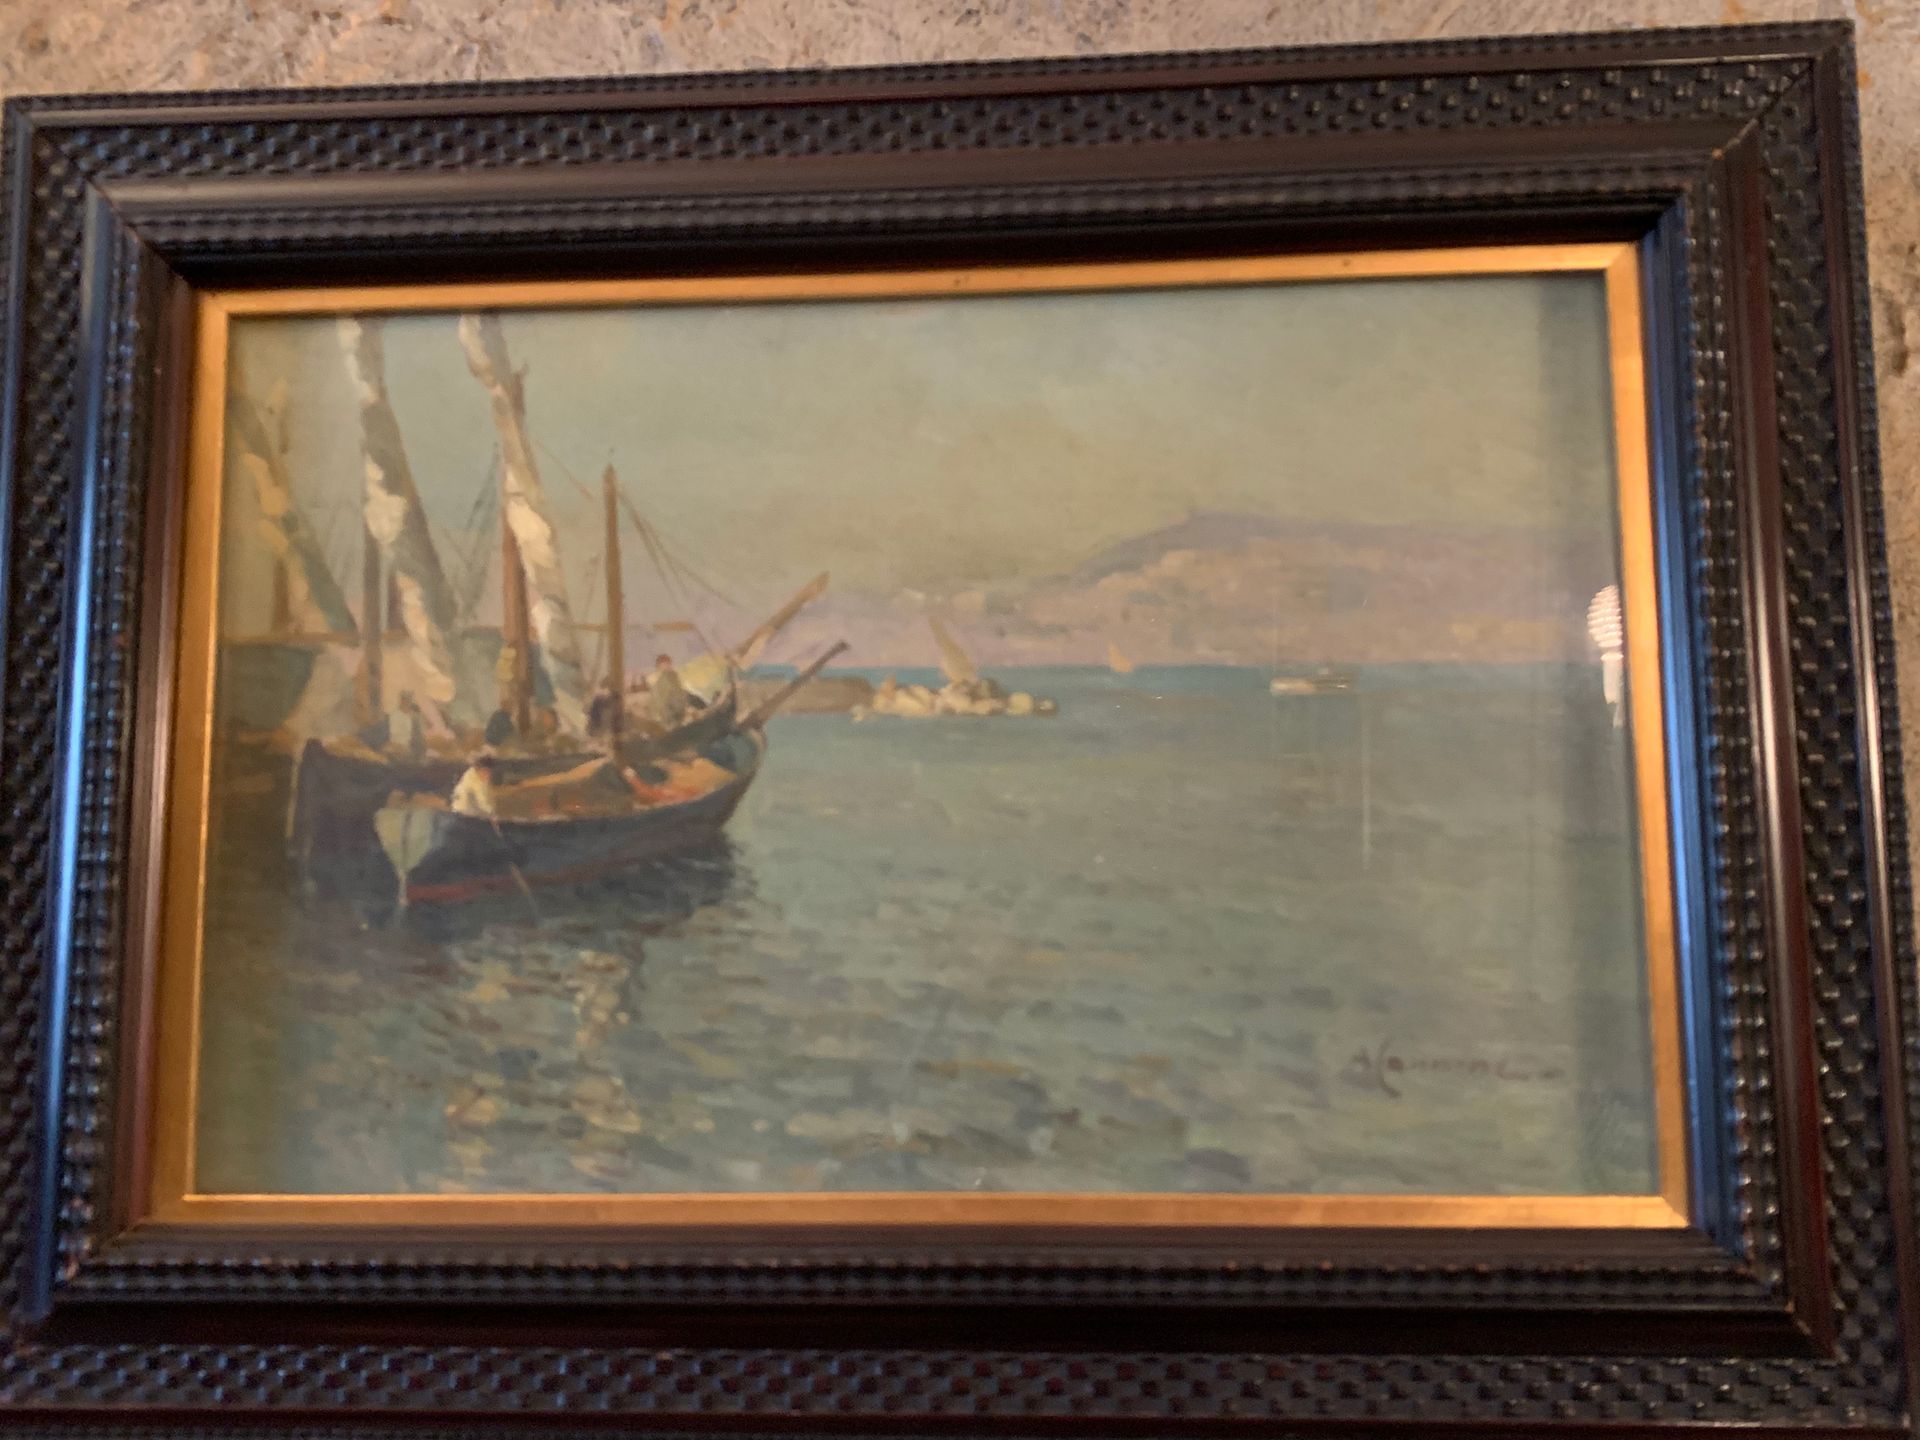 Antonio CANNONE (1937) "意大利海岸"。
板面油画
右下方有签名。
21 x 34 cm